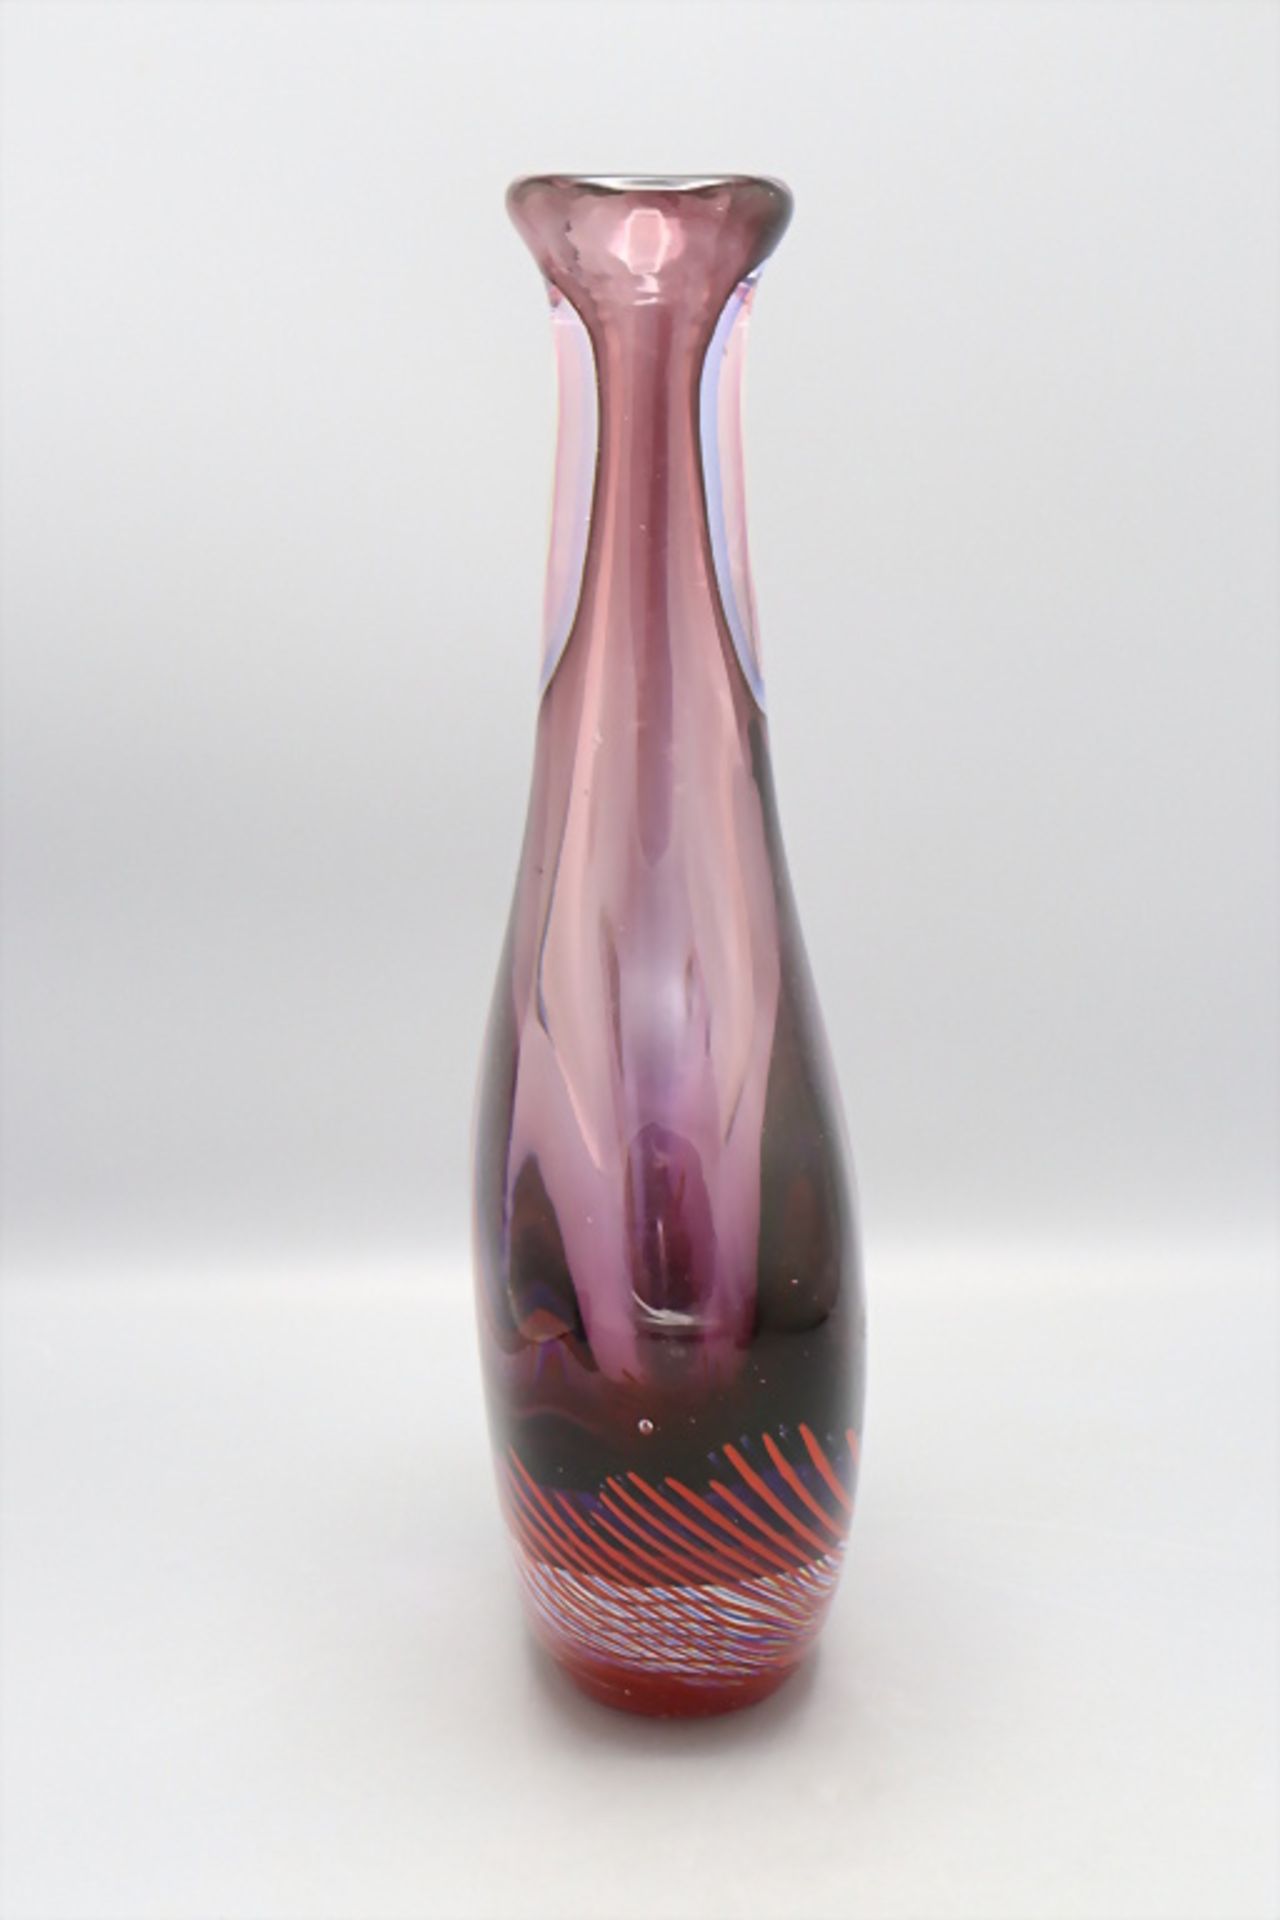 Glasziervase / A decorative glass vase 'Sommerso', Flavio Poli, Murano, 1960er Jahre - Image 4 of 6